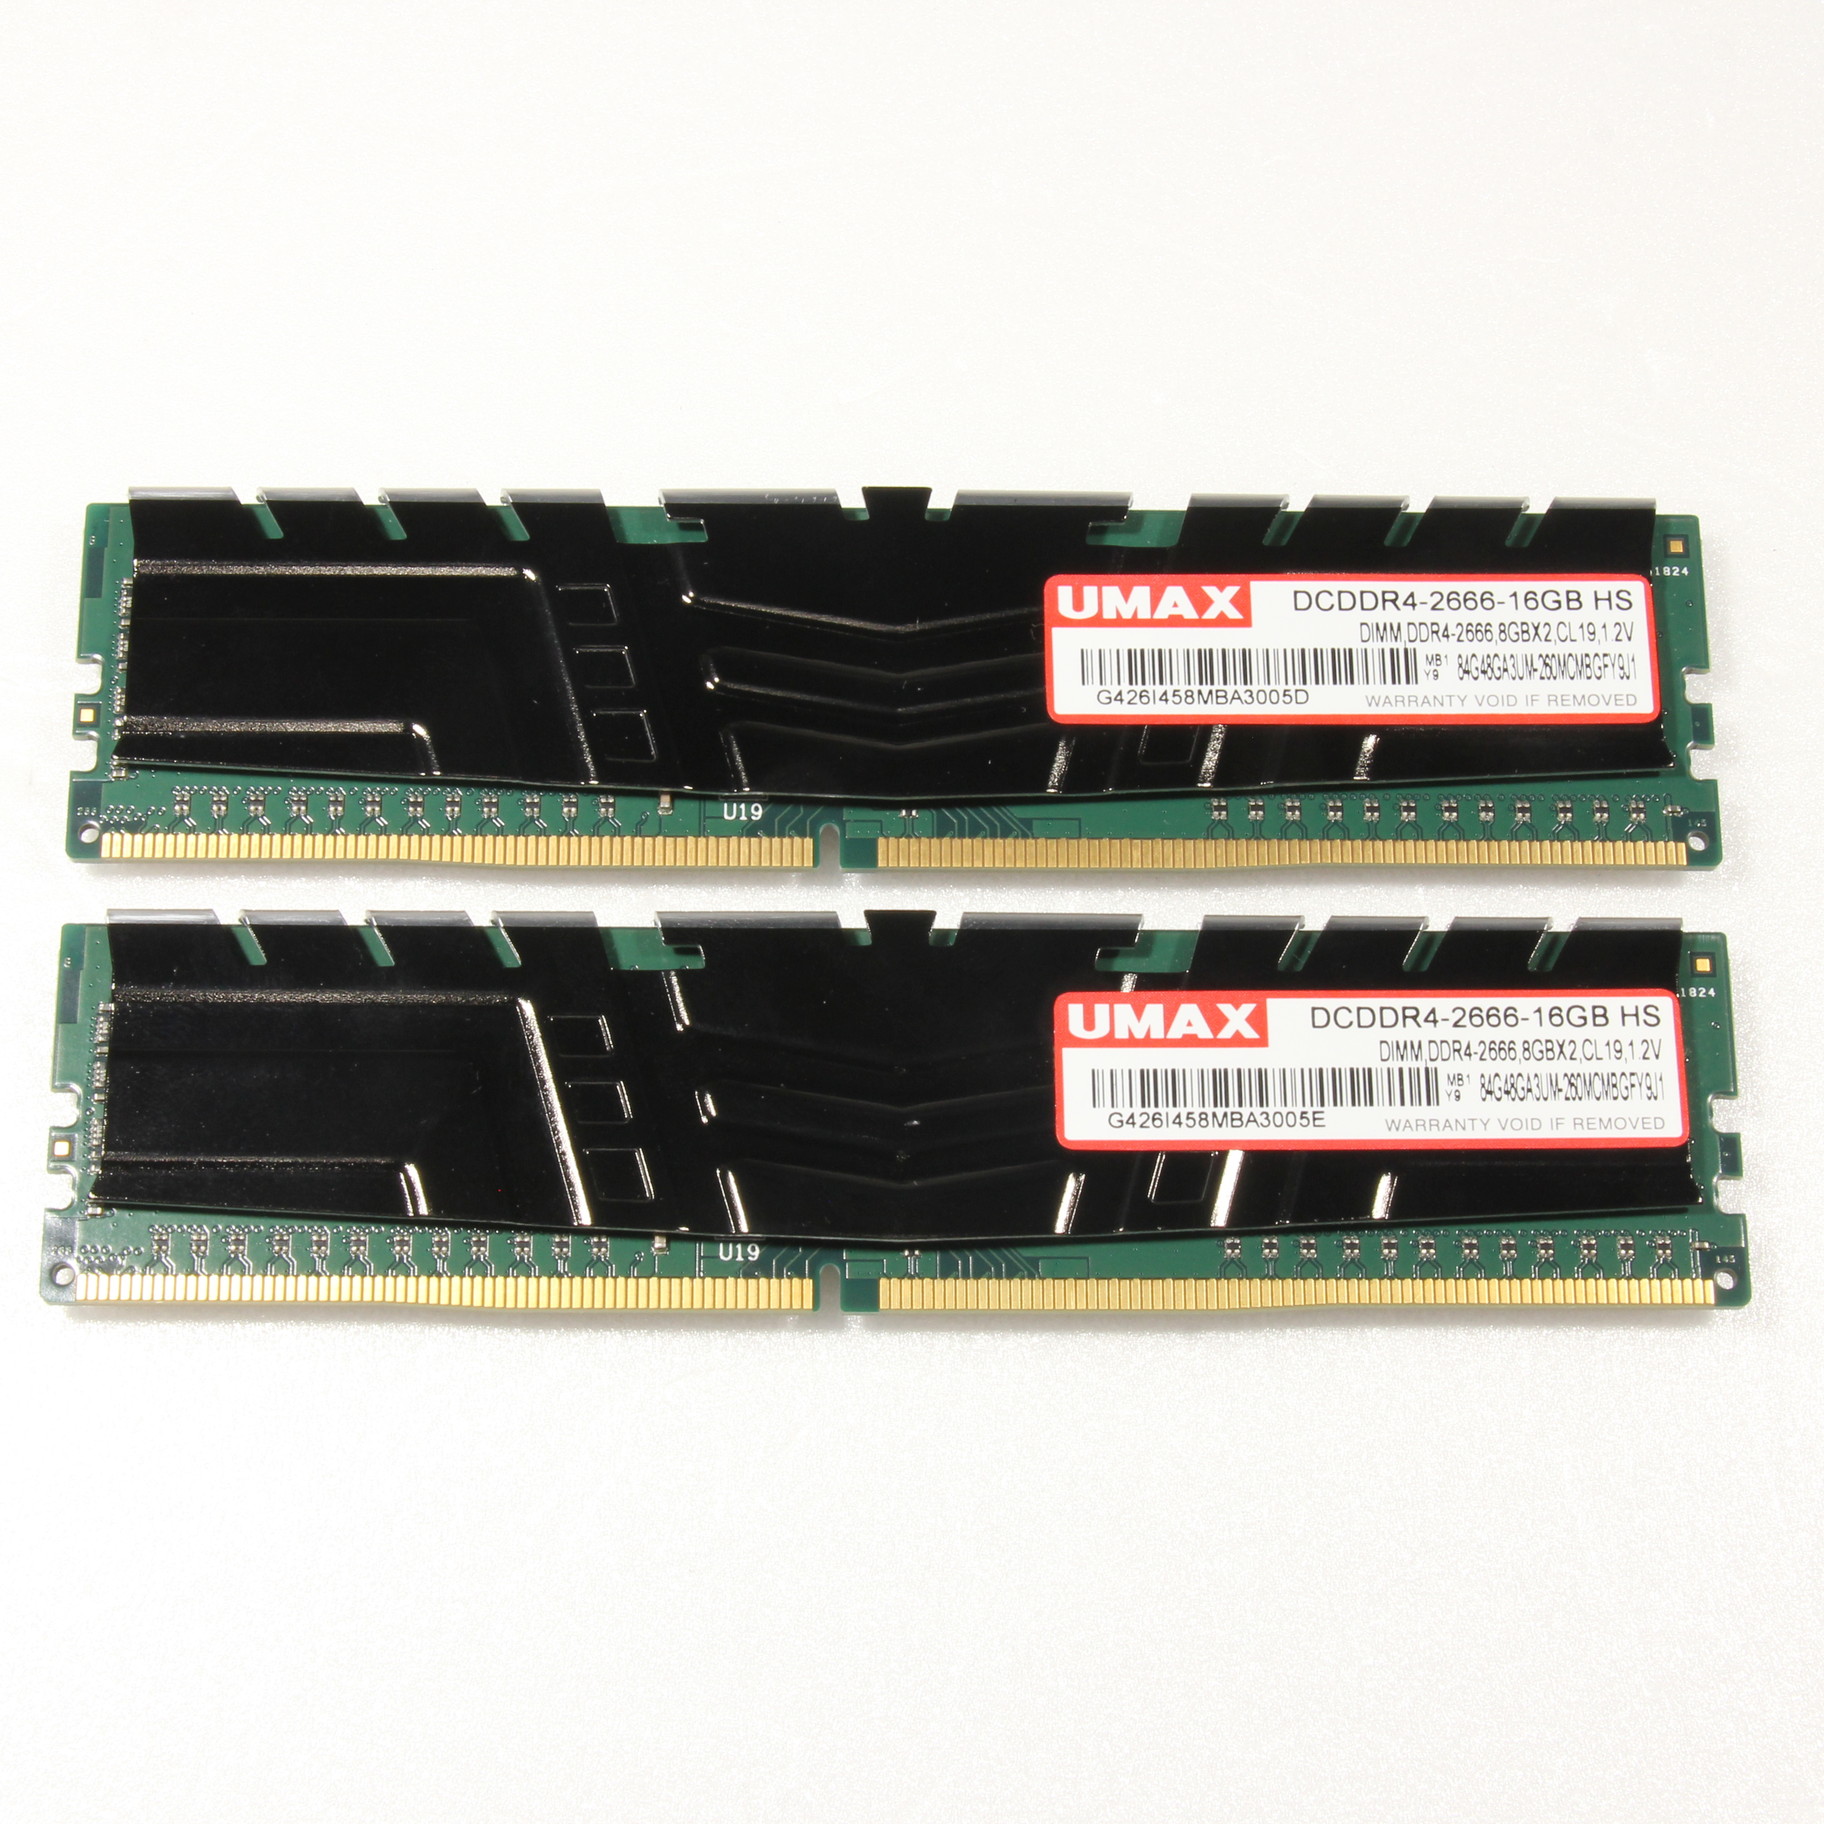 UMAX DCDDR4-2666-16GB HS  (8GBx2)